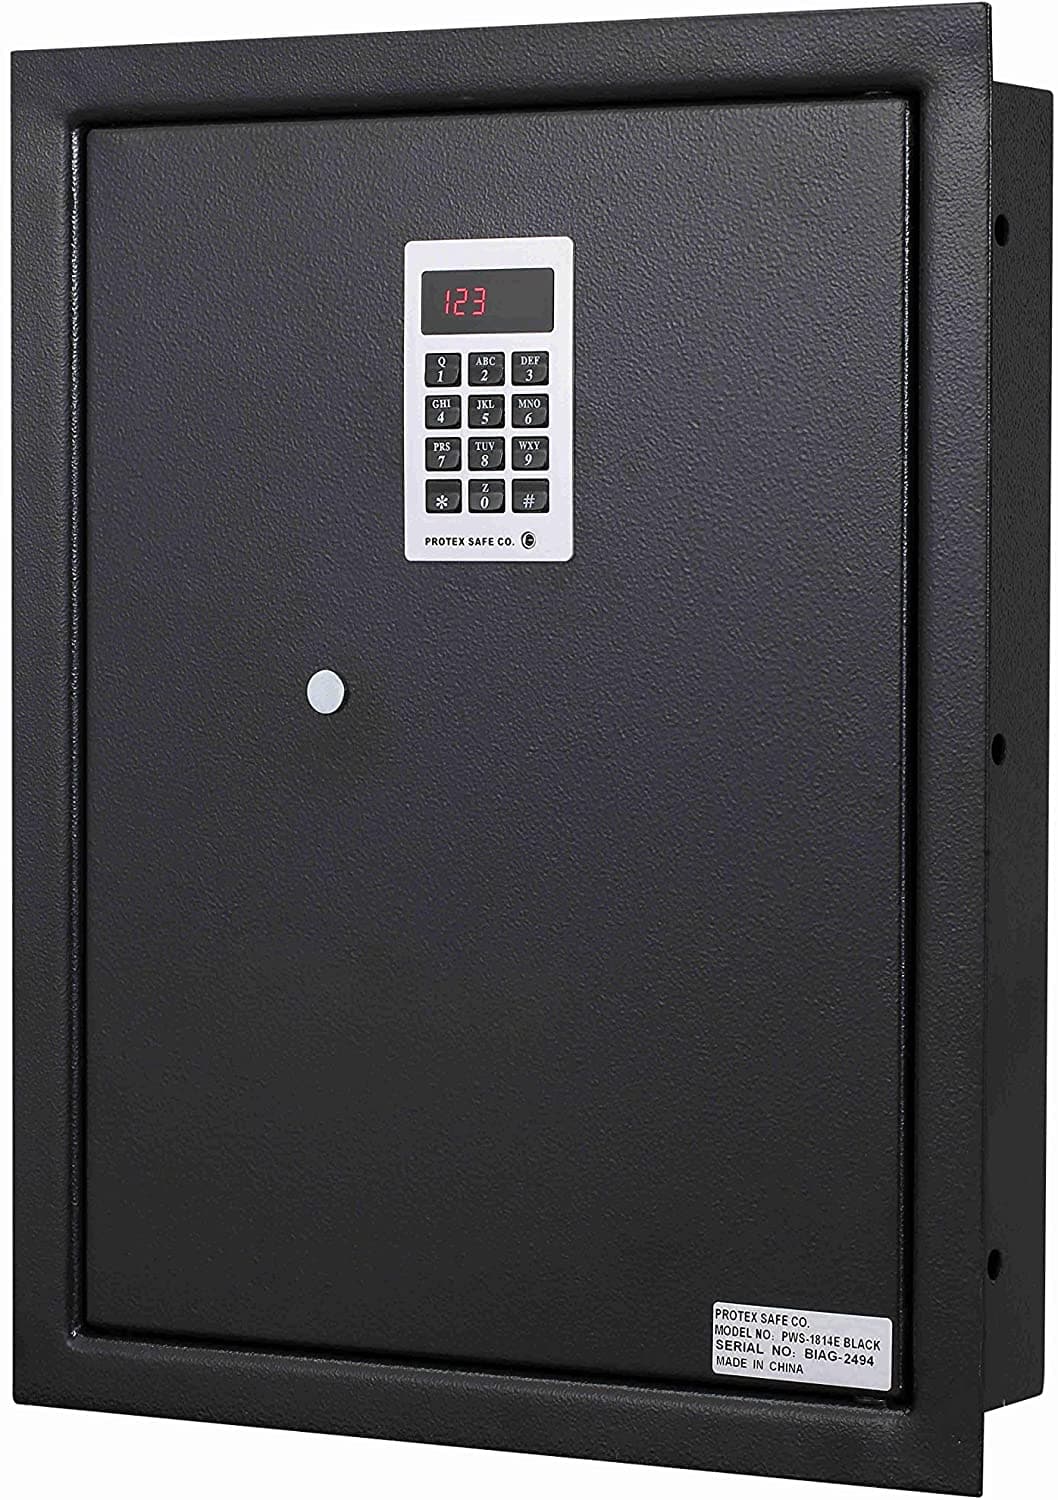 Protex Electronic Keypad Wall Safe - 2 Removable Shelves and Velvet lining - Senior.com Wall Safes